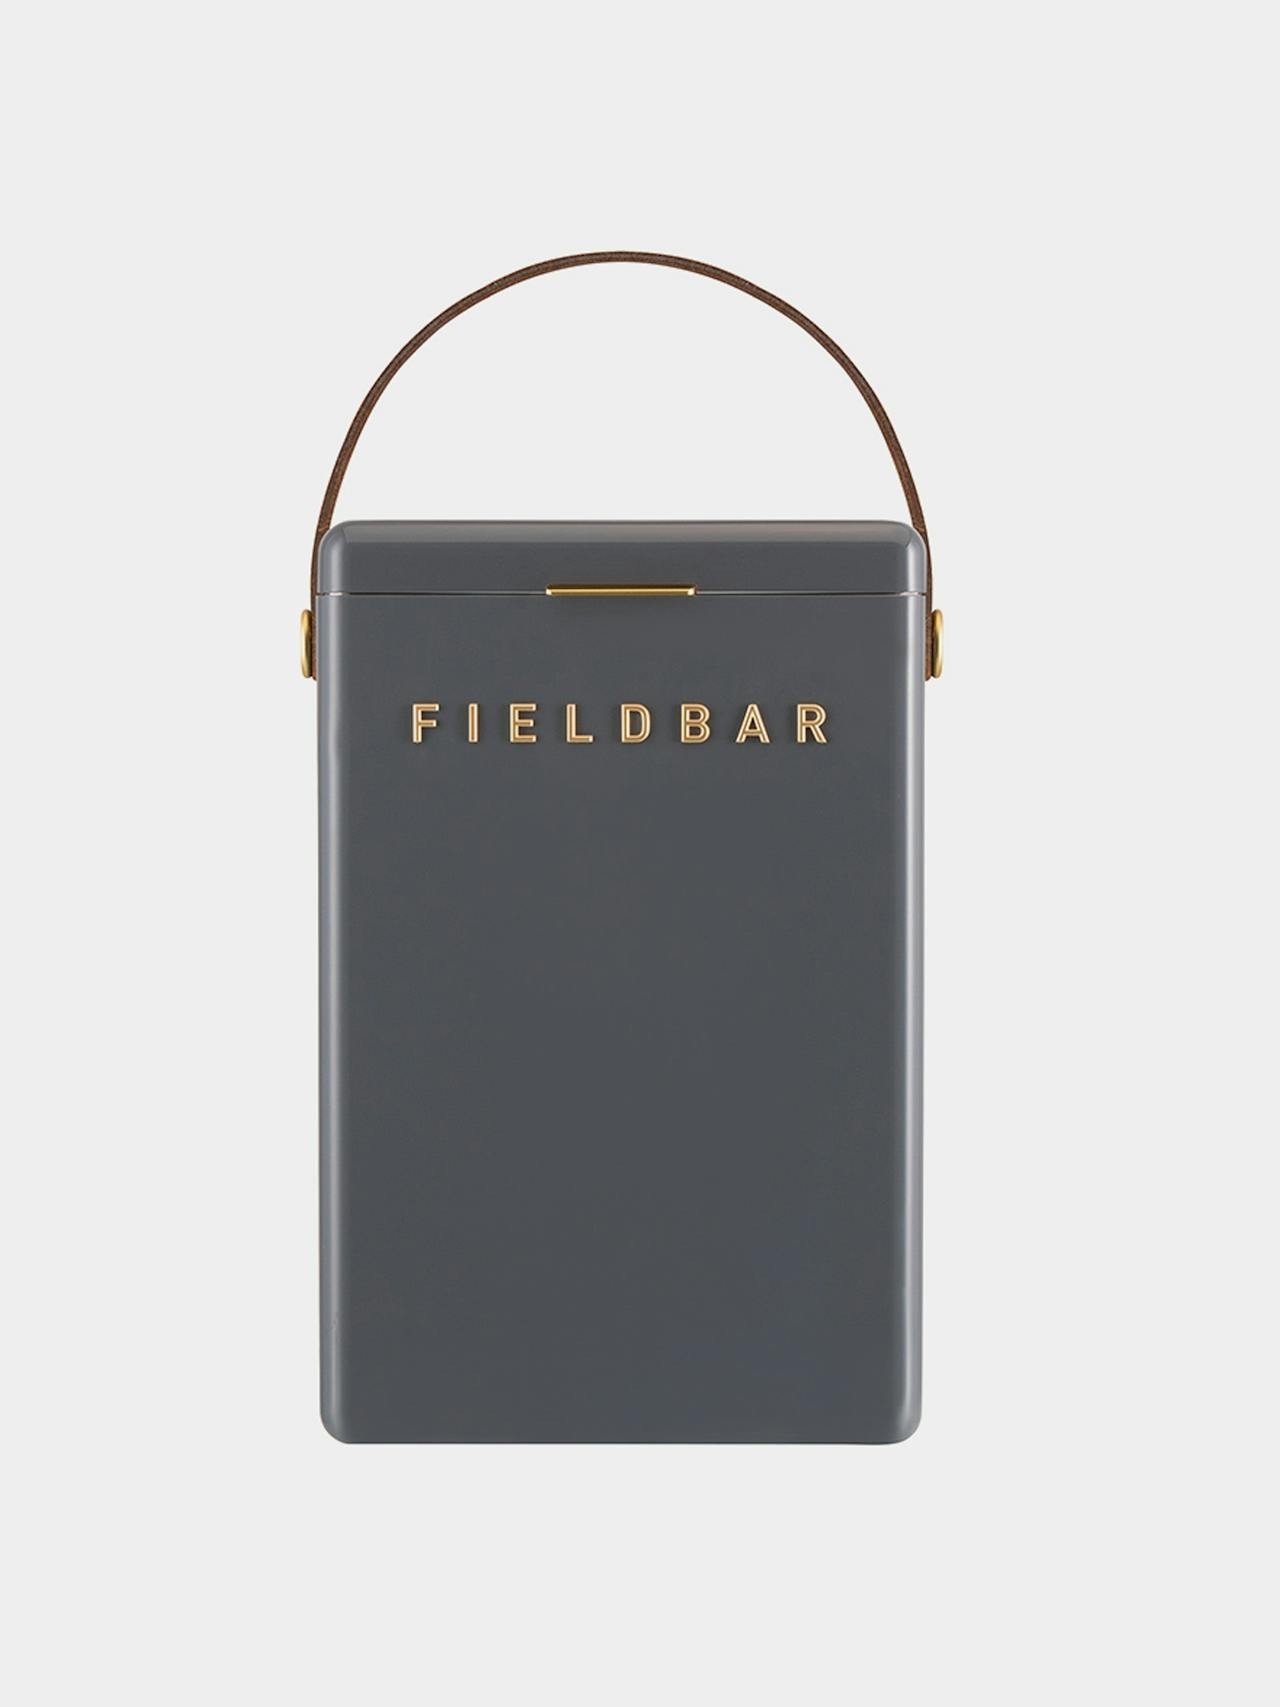 Oyster grey fieldbar drinks box